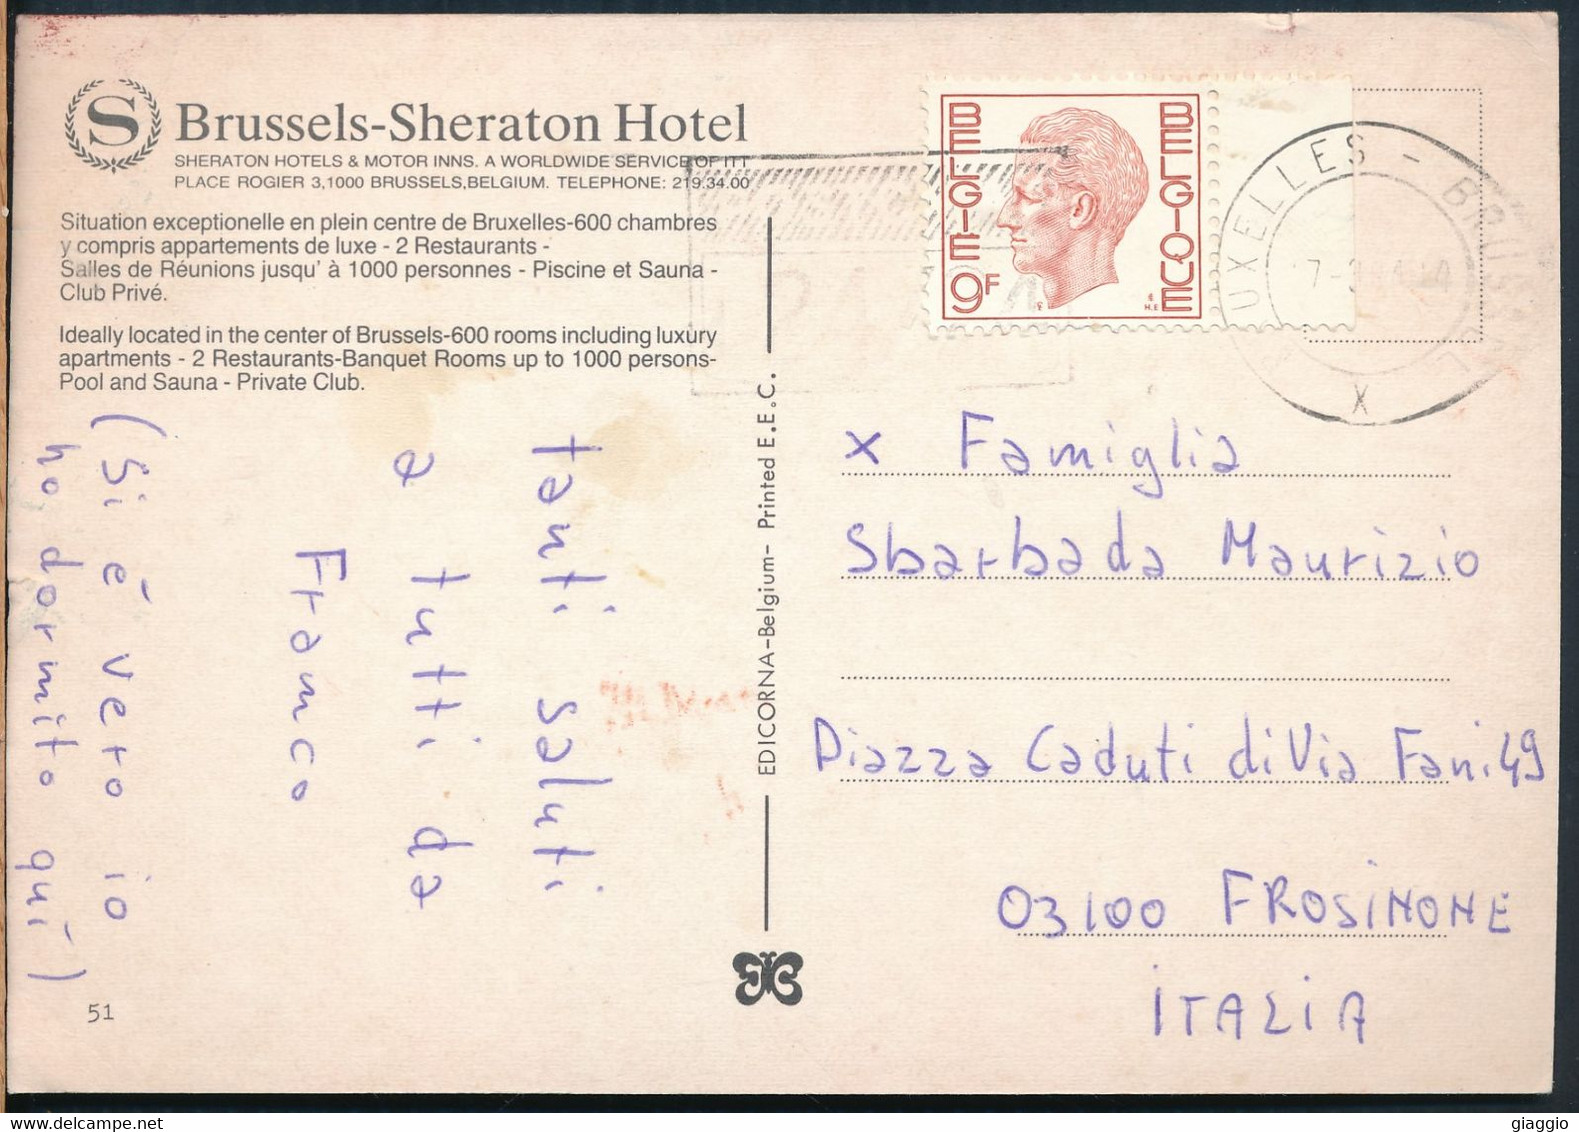 °°° 29779 - BELGIUM - BRUSSELS SHERATON HOTEL - 1984 With Stamps °°° - Cafés, Hôtels, Restaurants